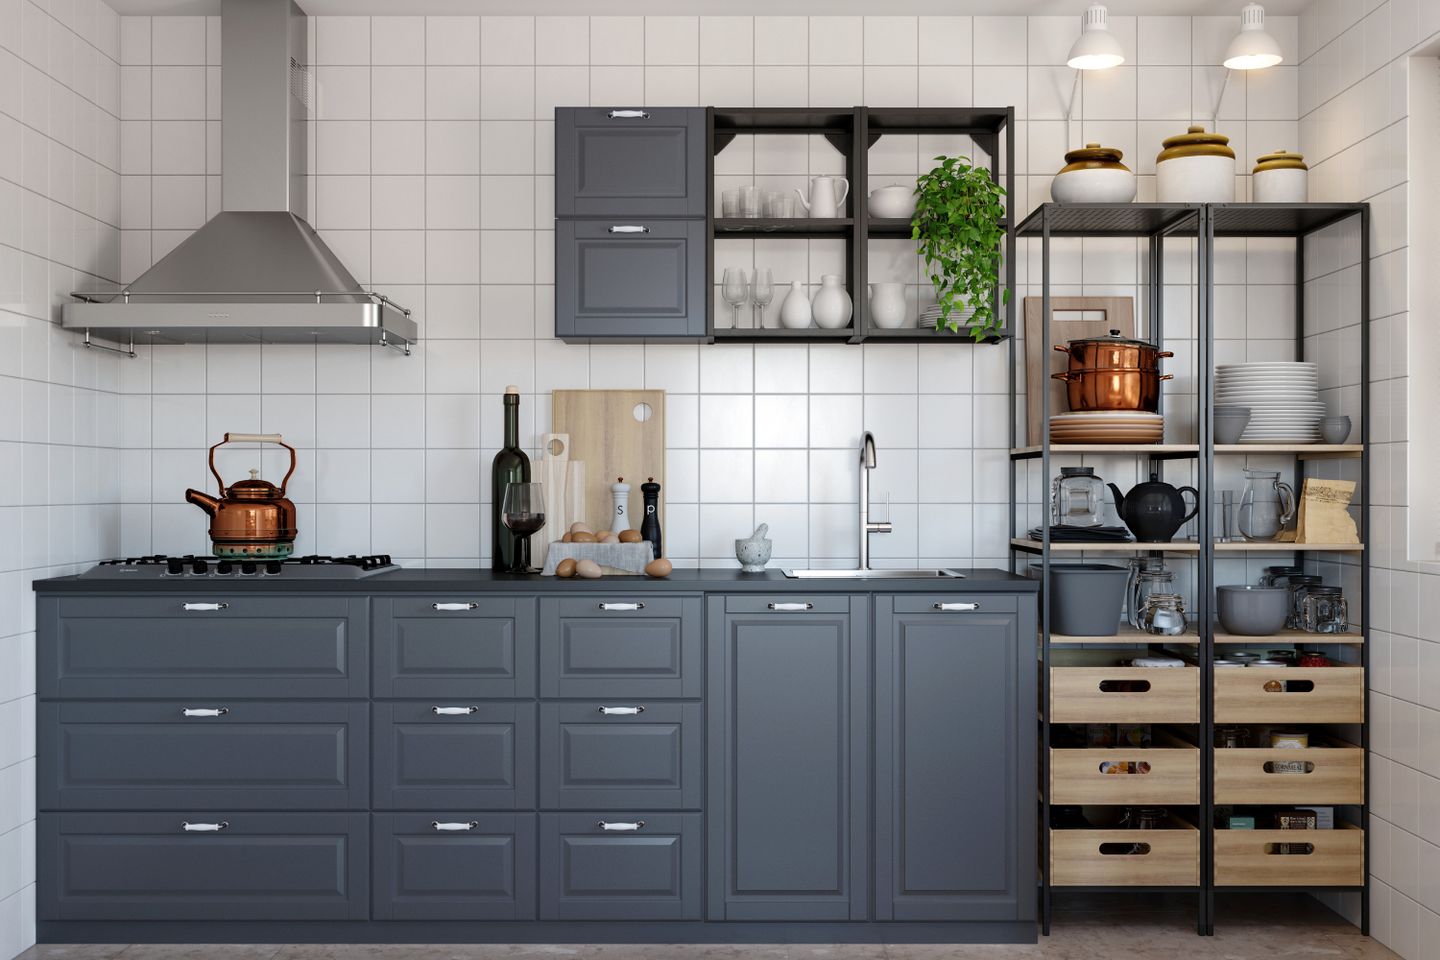 Kitchen Design With Black Storage Units - Livspace